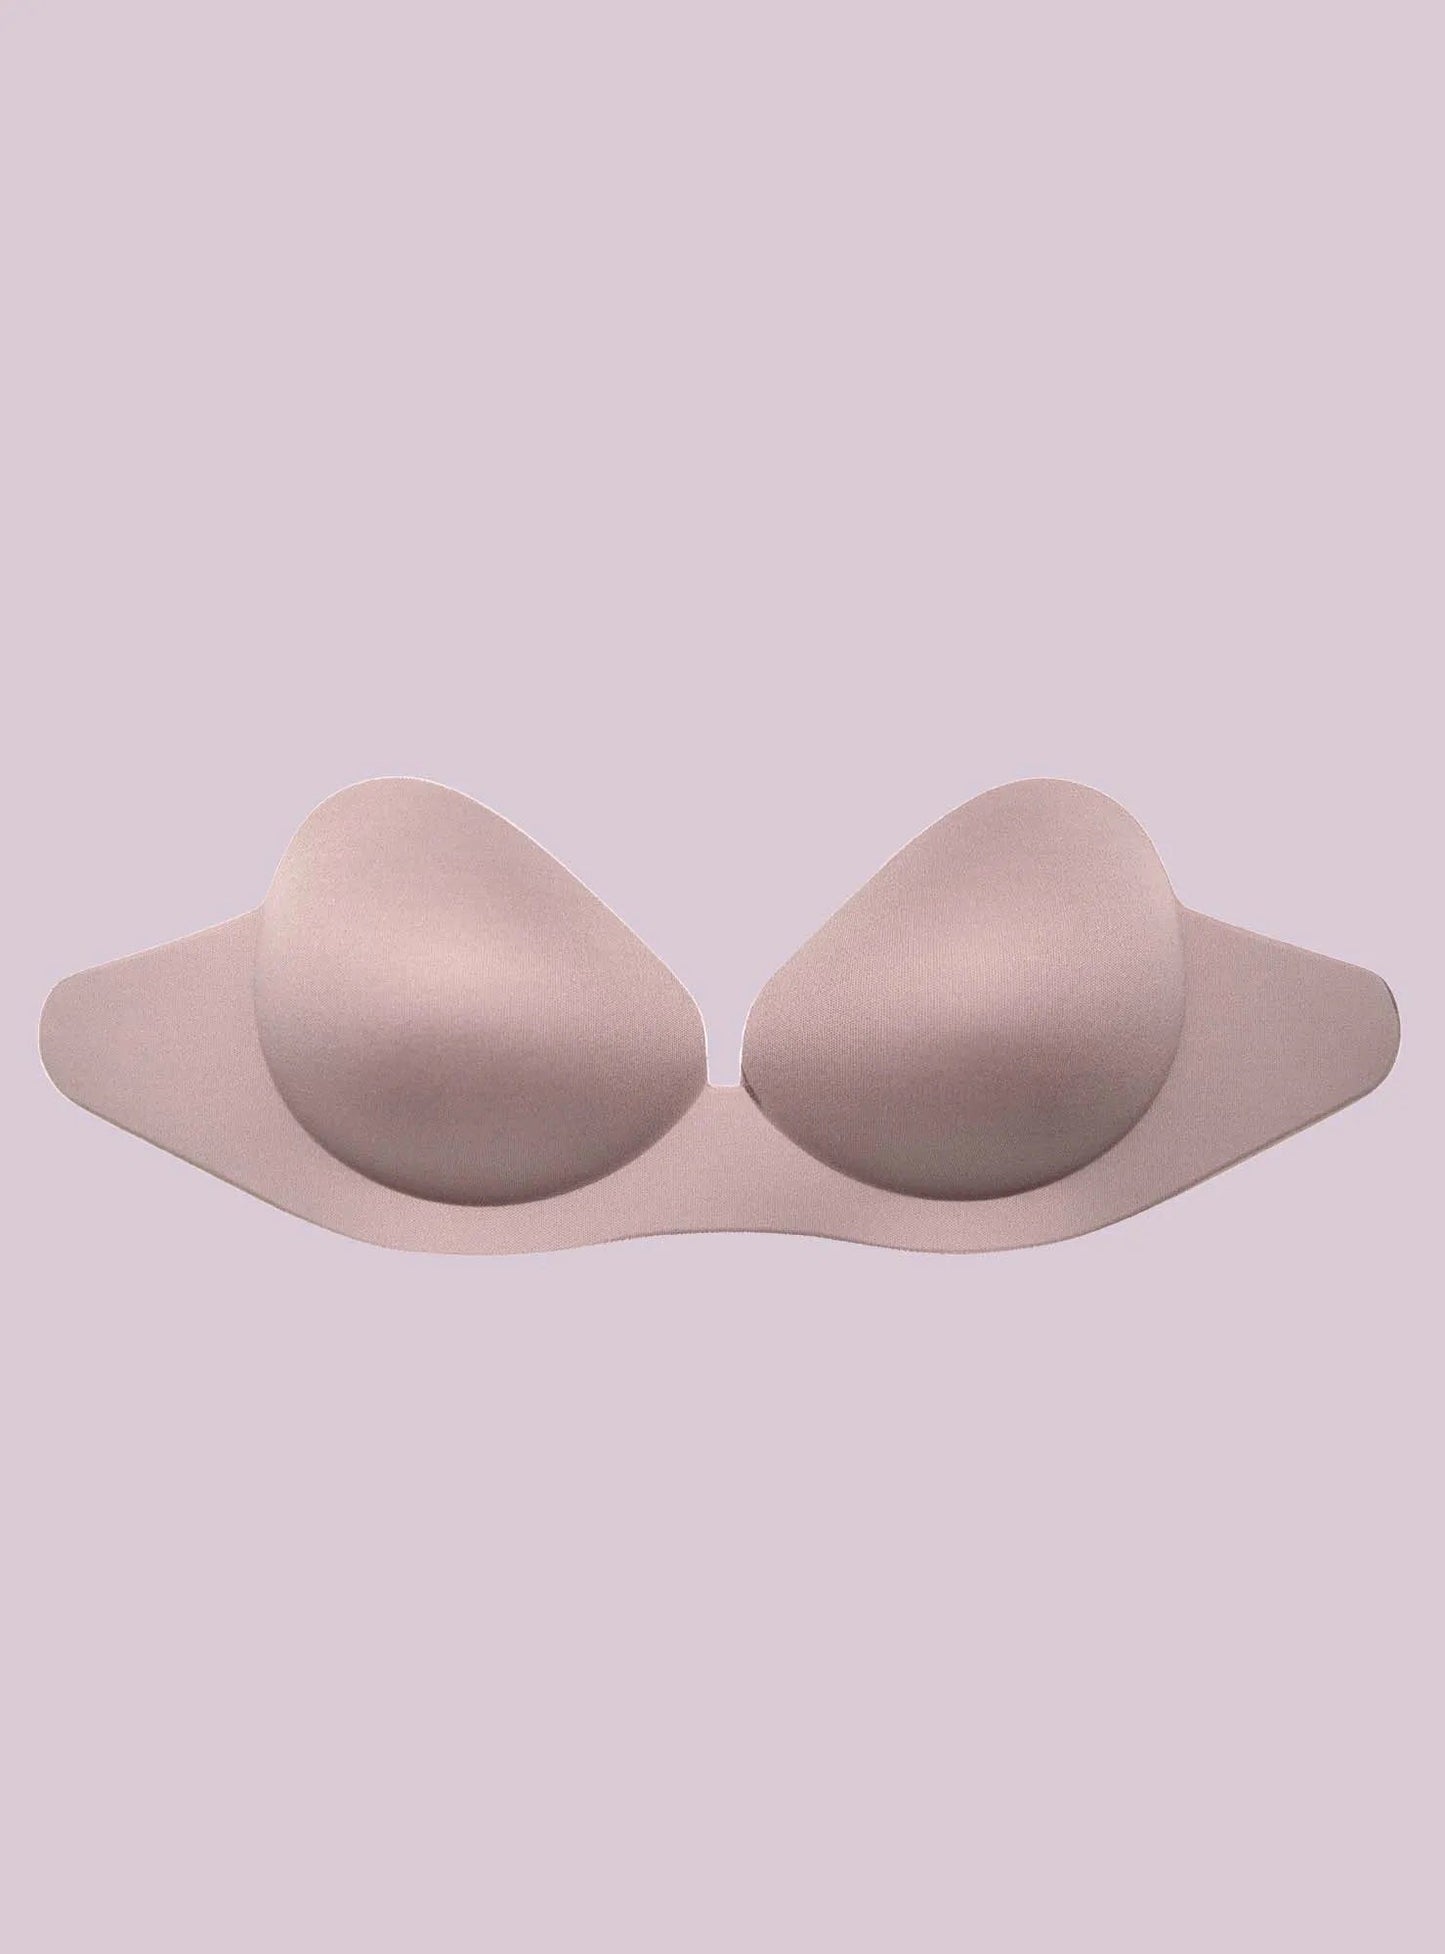 Corpiño adhesivo de silicona AdereUP Impulse para senos pequeños 636 color chocolate pequeño